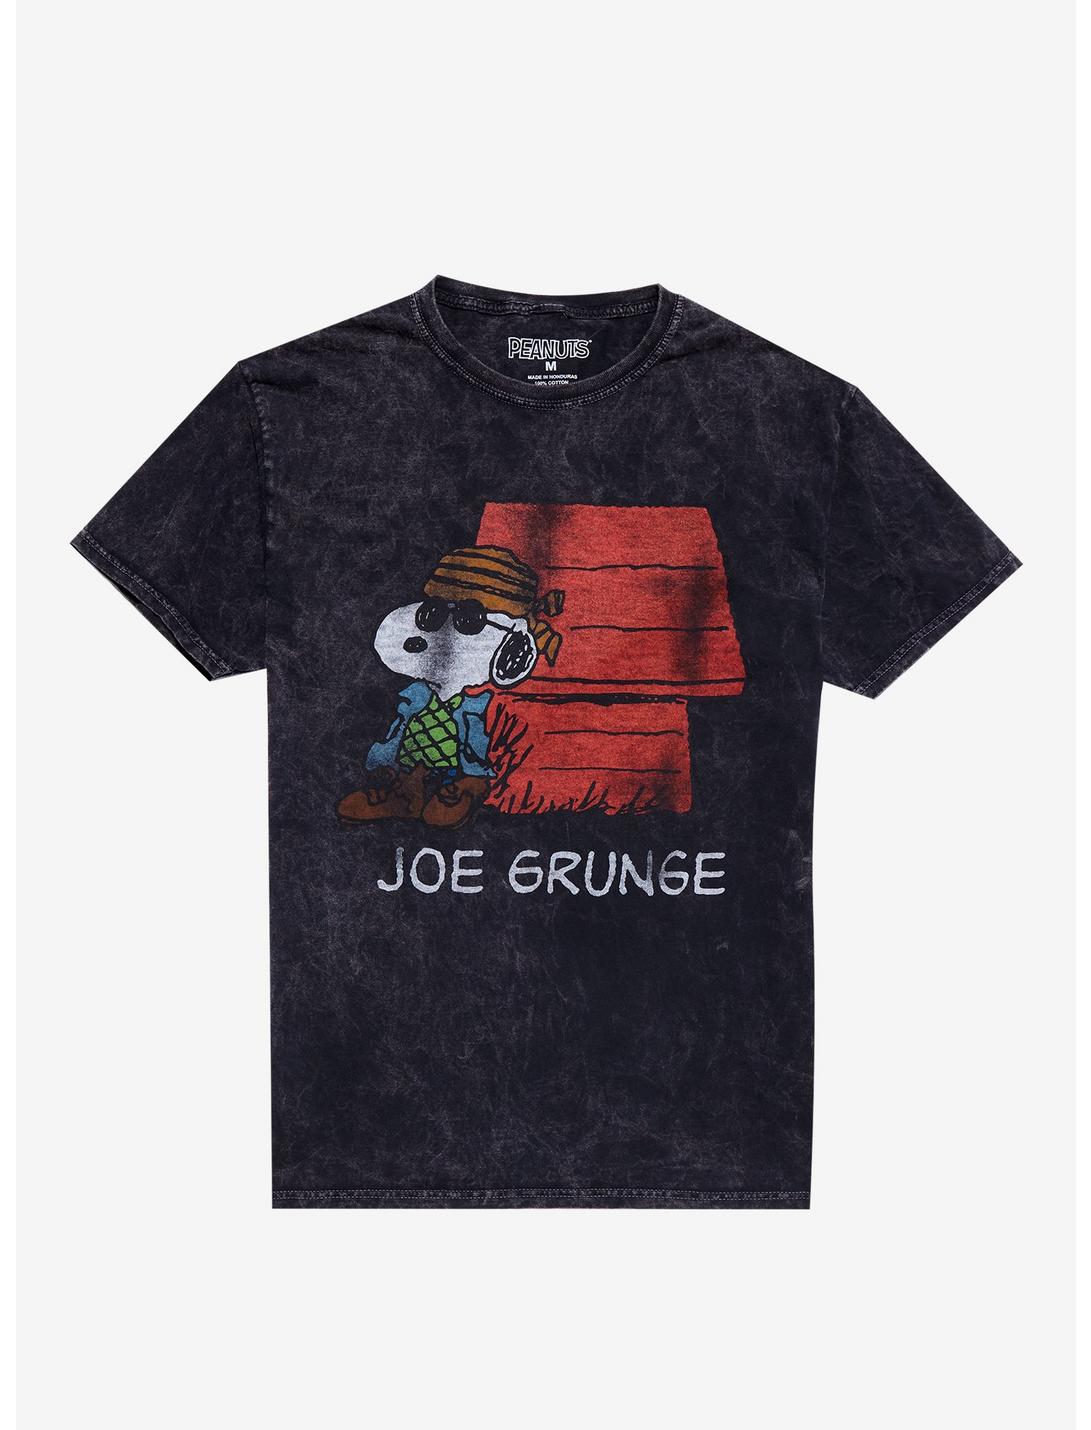 Peanuts Joe Grunge Vintage Dark Wash T-Shirt, MULTI, hi-res